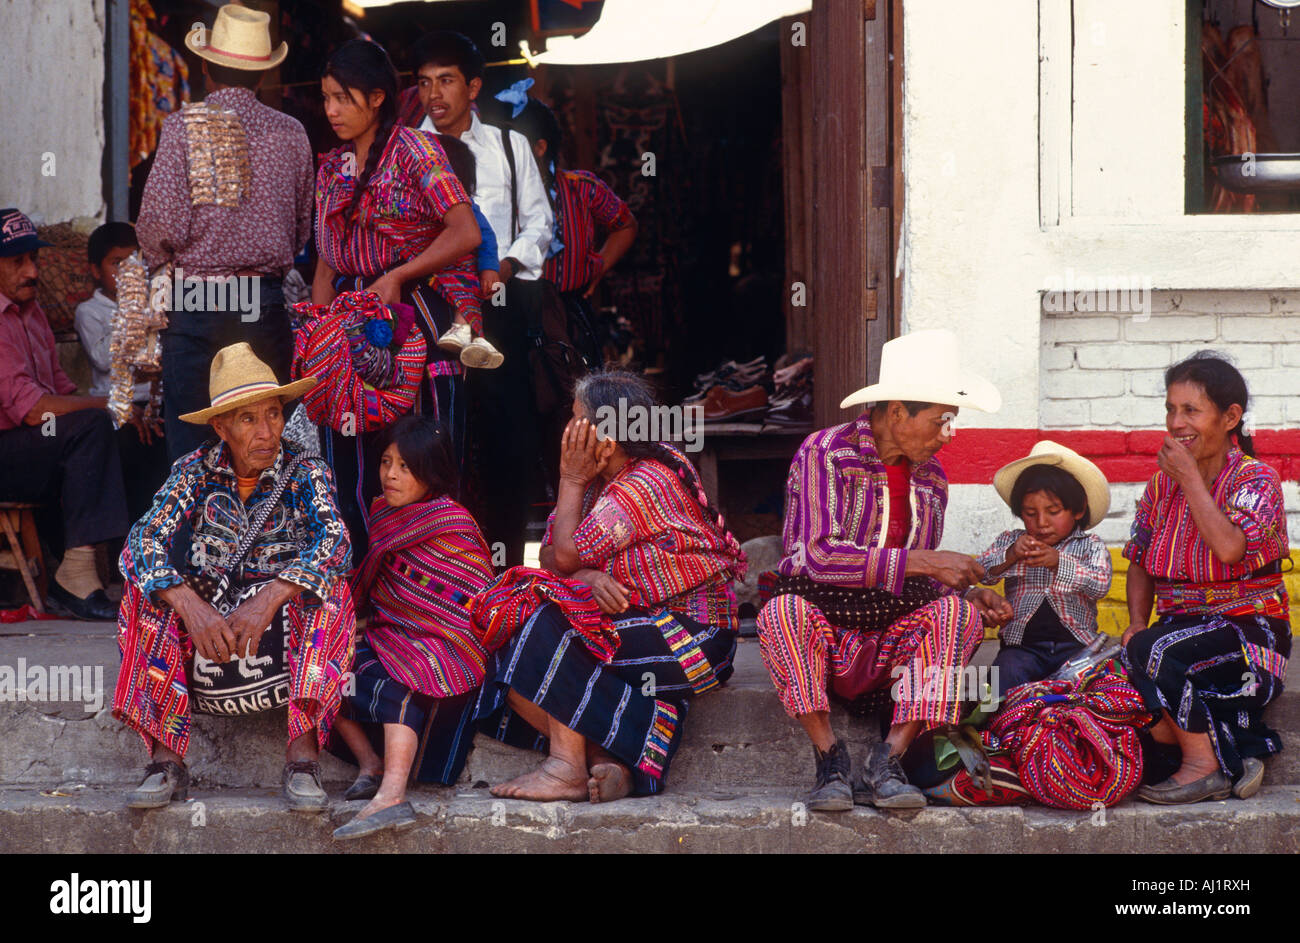 Local people in village Solola Guatemala Stock Photo - Alamy